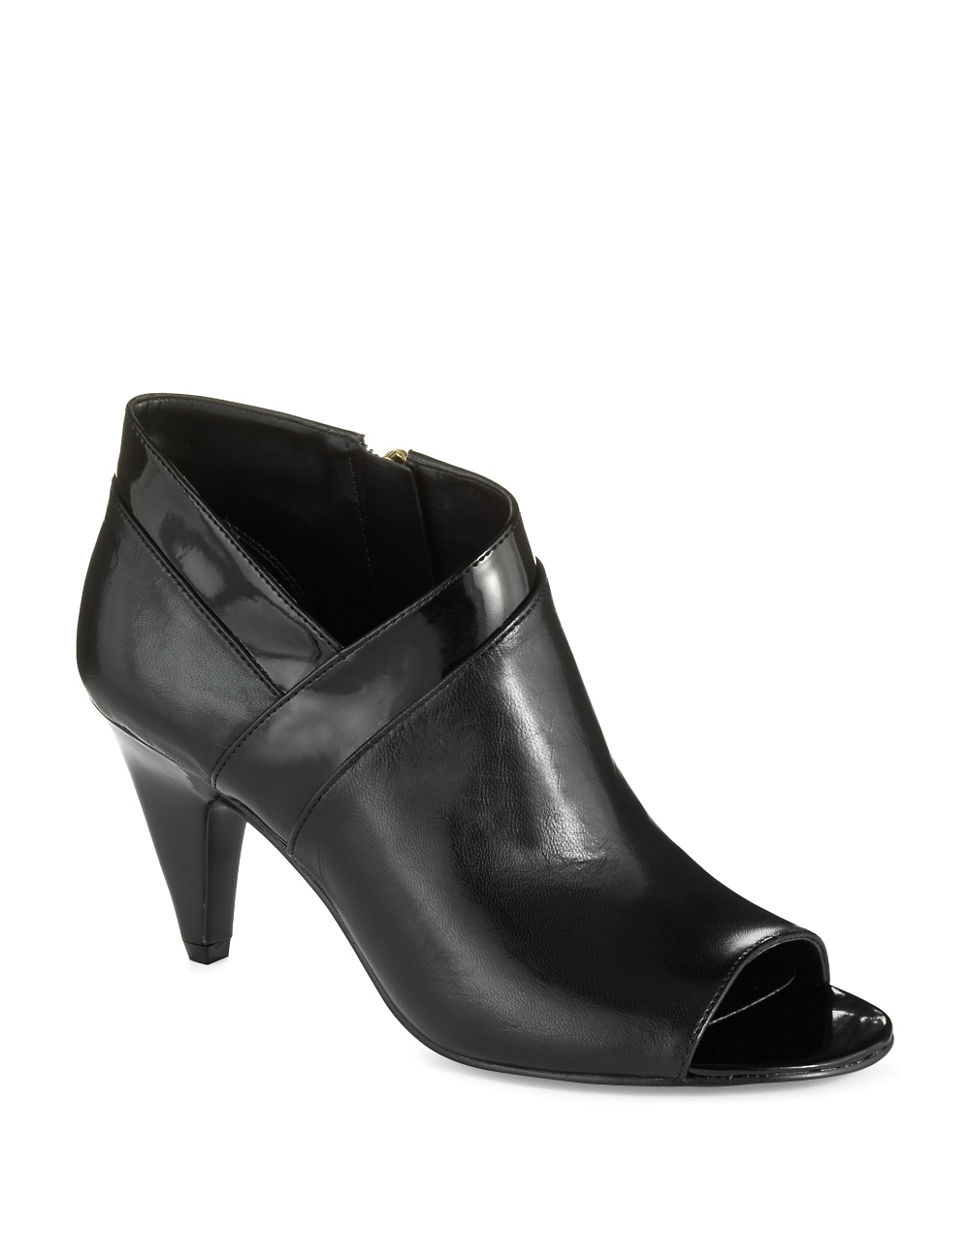 Bandolino Dalinda Peep Toe Heels in Black (Black Leather) | Lyst